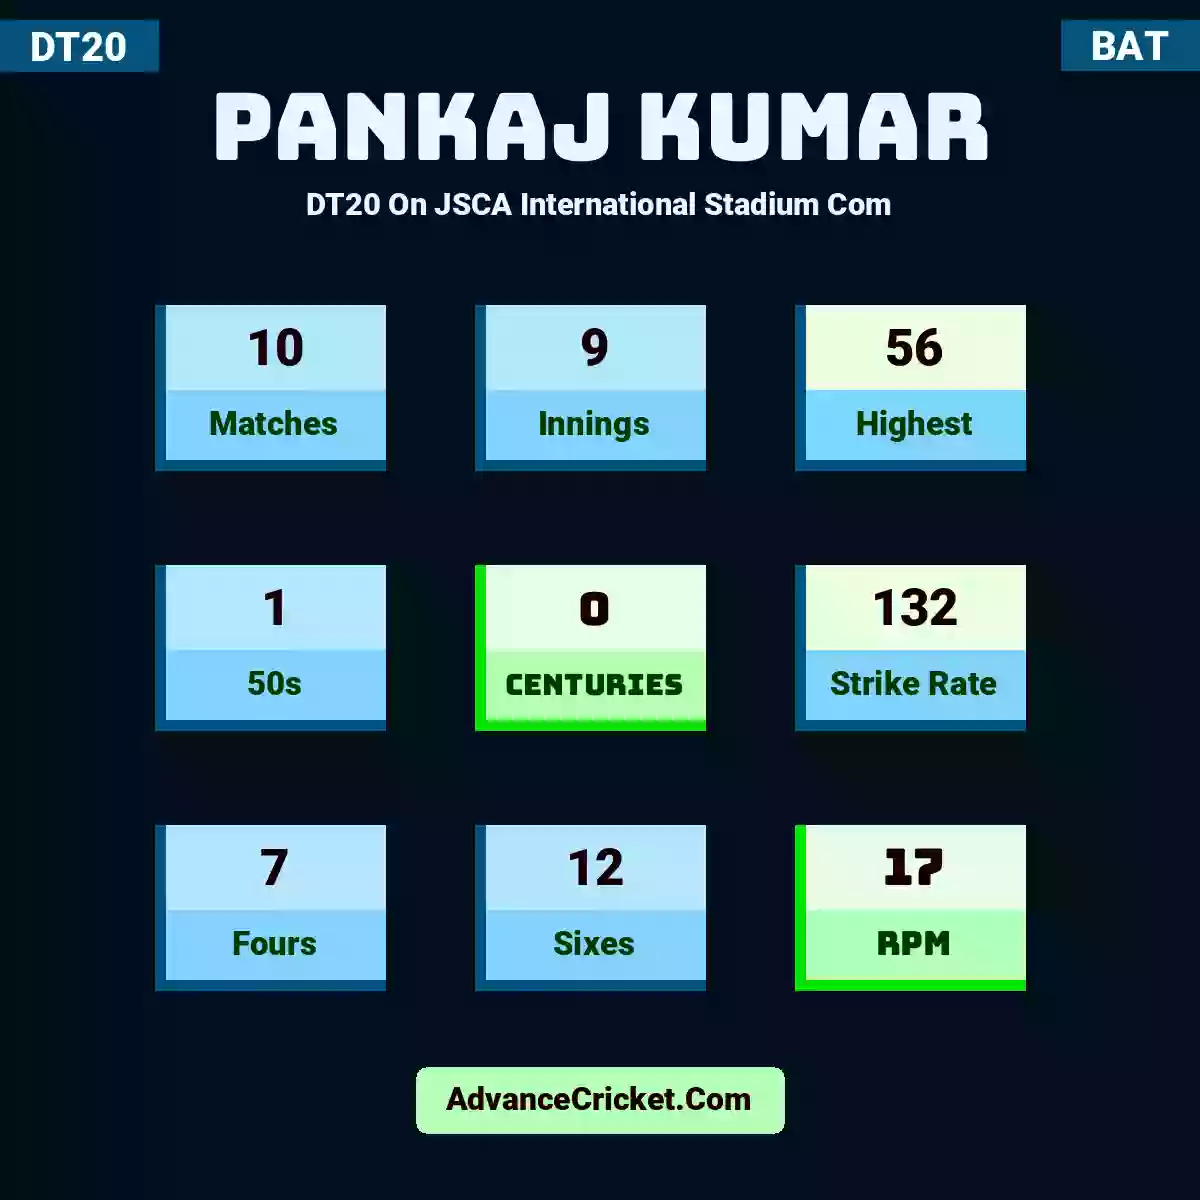 Pankaj Kumar DT20  On JSCA International Stadium Com, Pankaj Kumar played 10 matches, scored 56 runs as highest, 1 half-centuries, and 0 centuries, with a strike rate of 132. P.Kumar hit 7 fours and 12 sixes, with an RPM of 17.